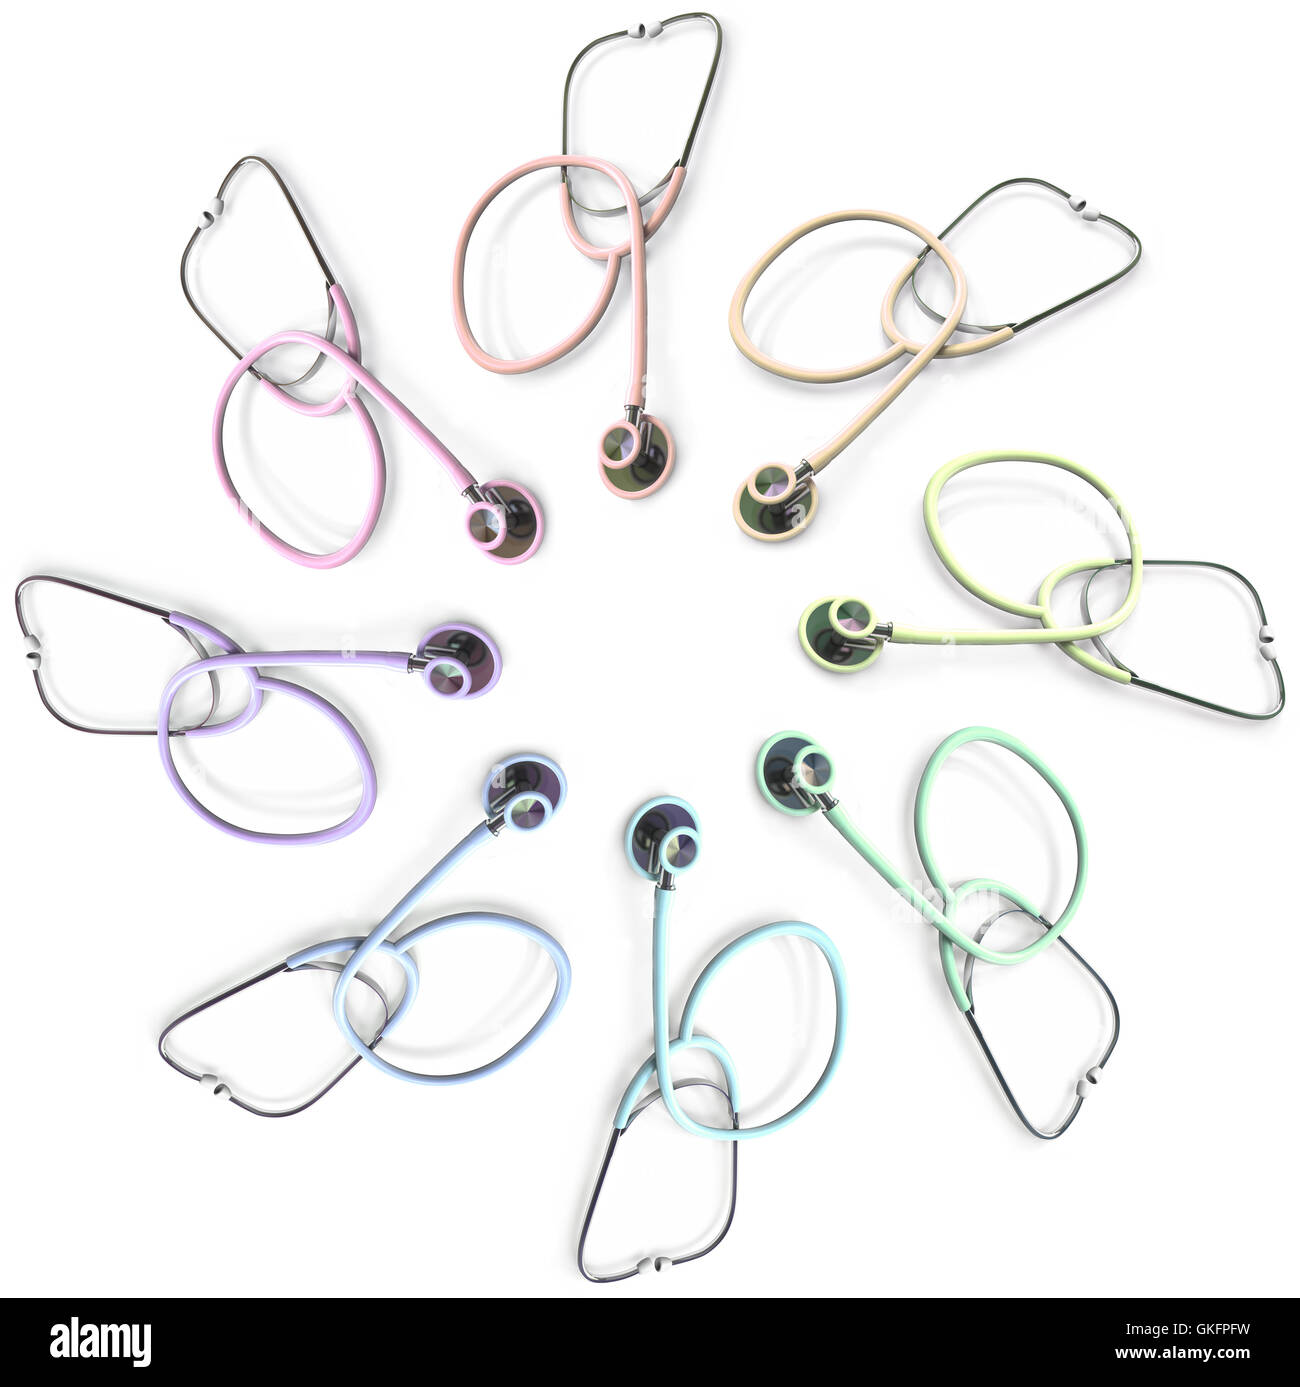 Viele farbige Stethoskope Stockfoto